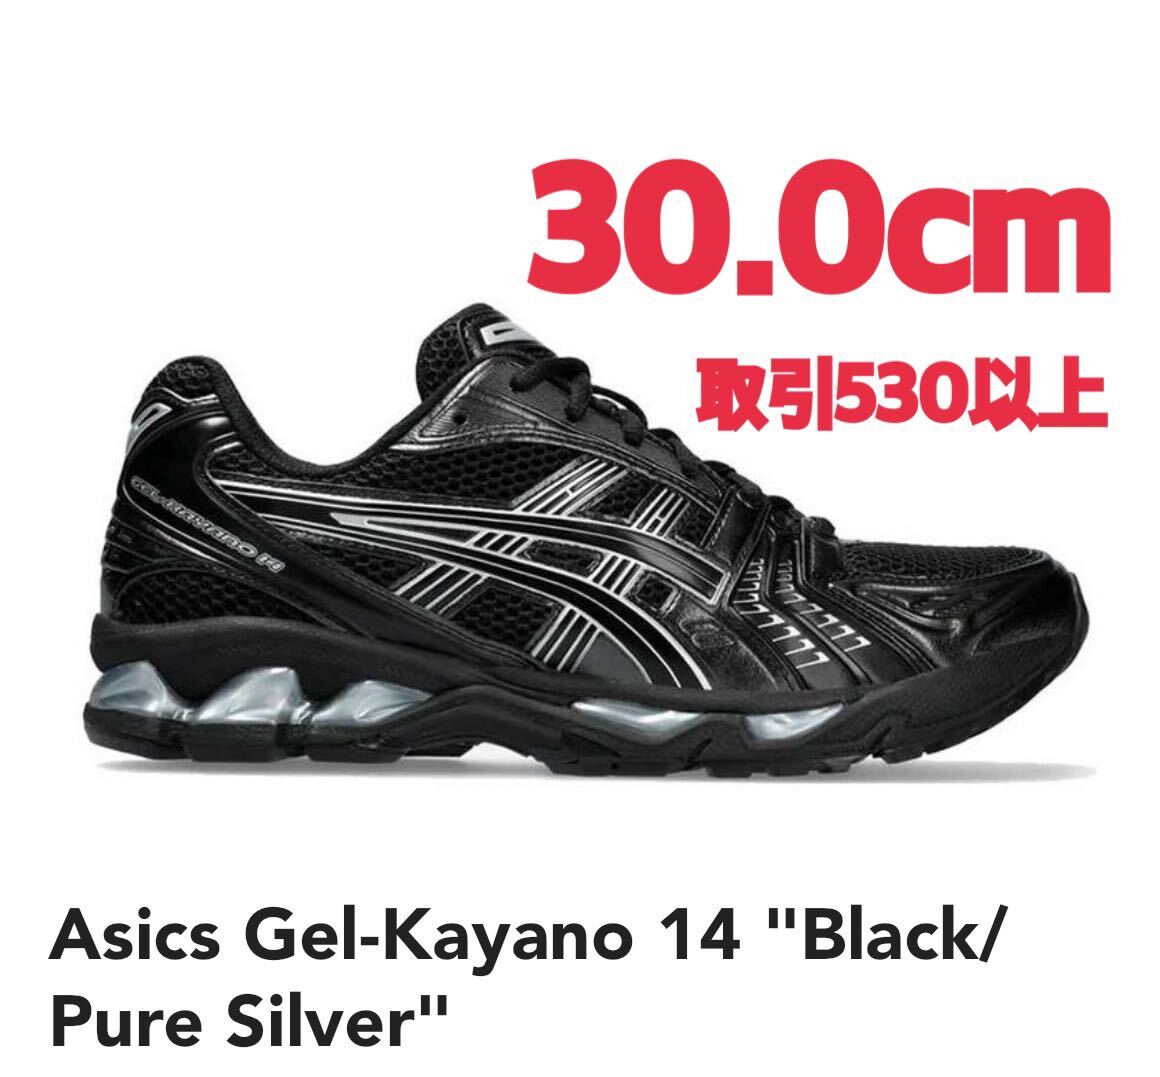 Asics Gel-Kayano 14 Black Pure Silver 30.0cm Asics gel kayano14 black pure silver Black/Pure Silver 30cm US12.5